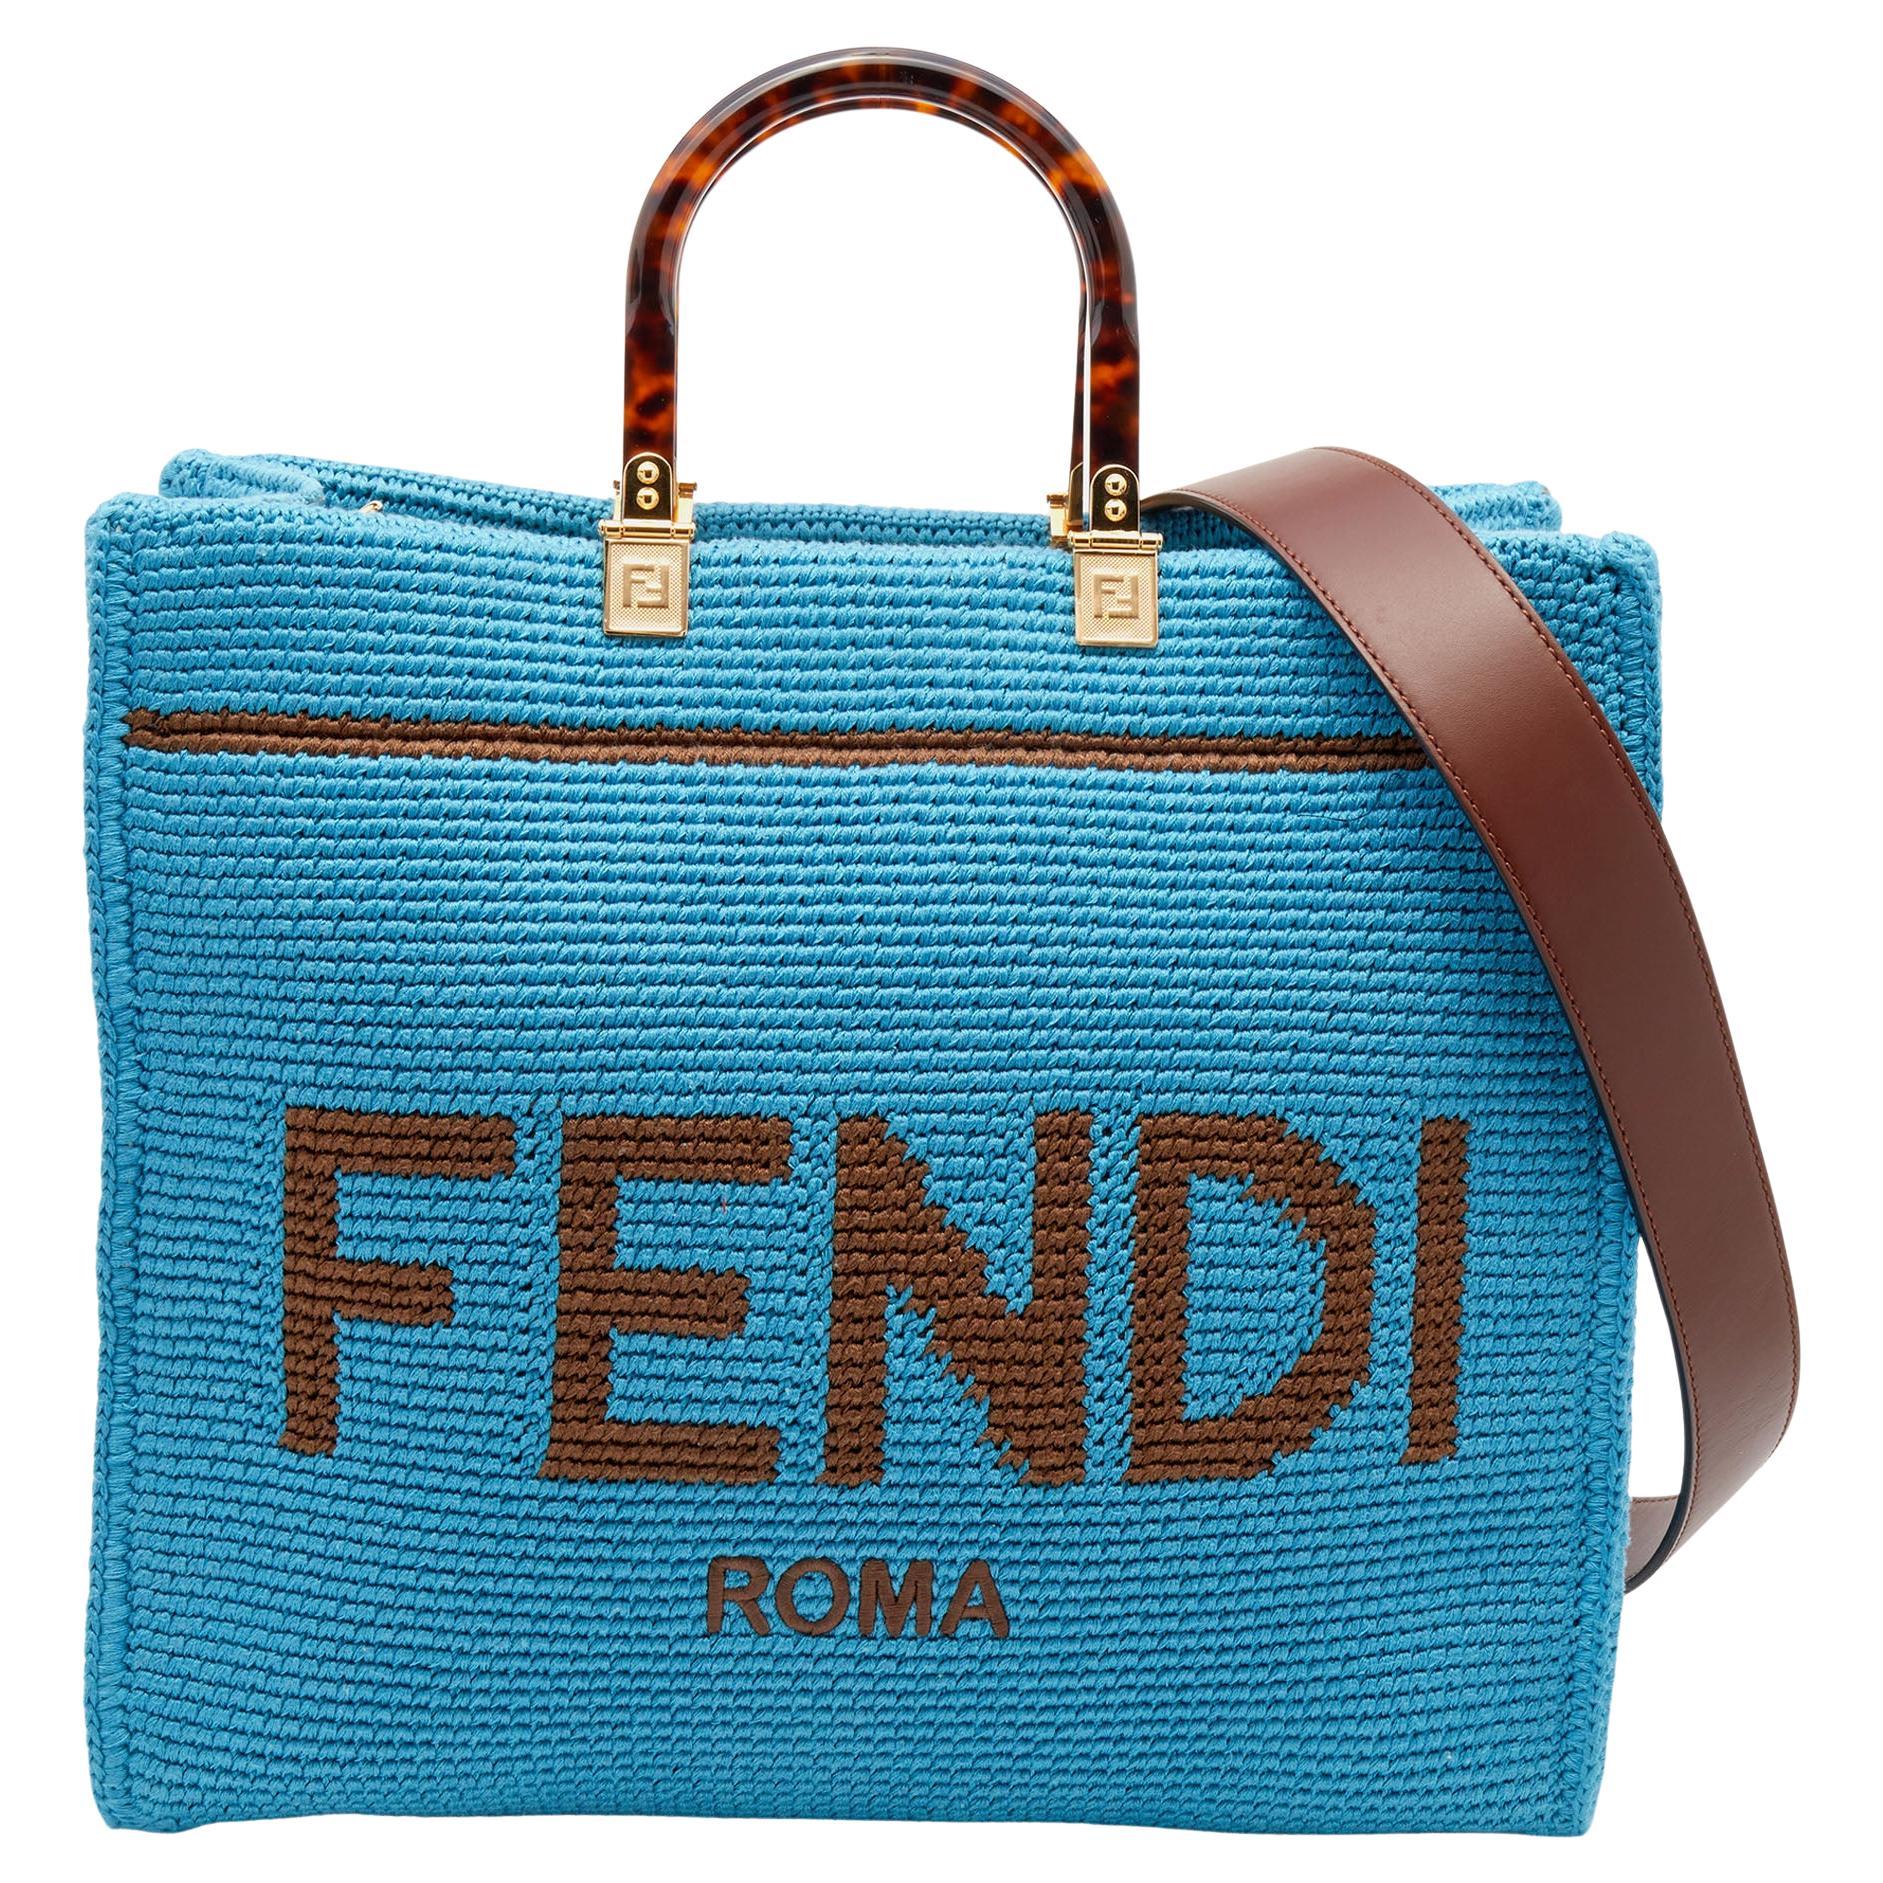 Fendi+Sunshine+Tote+Medium+Light+Blue+Leather for sale online